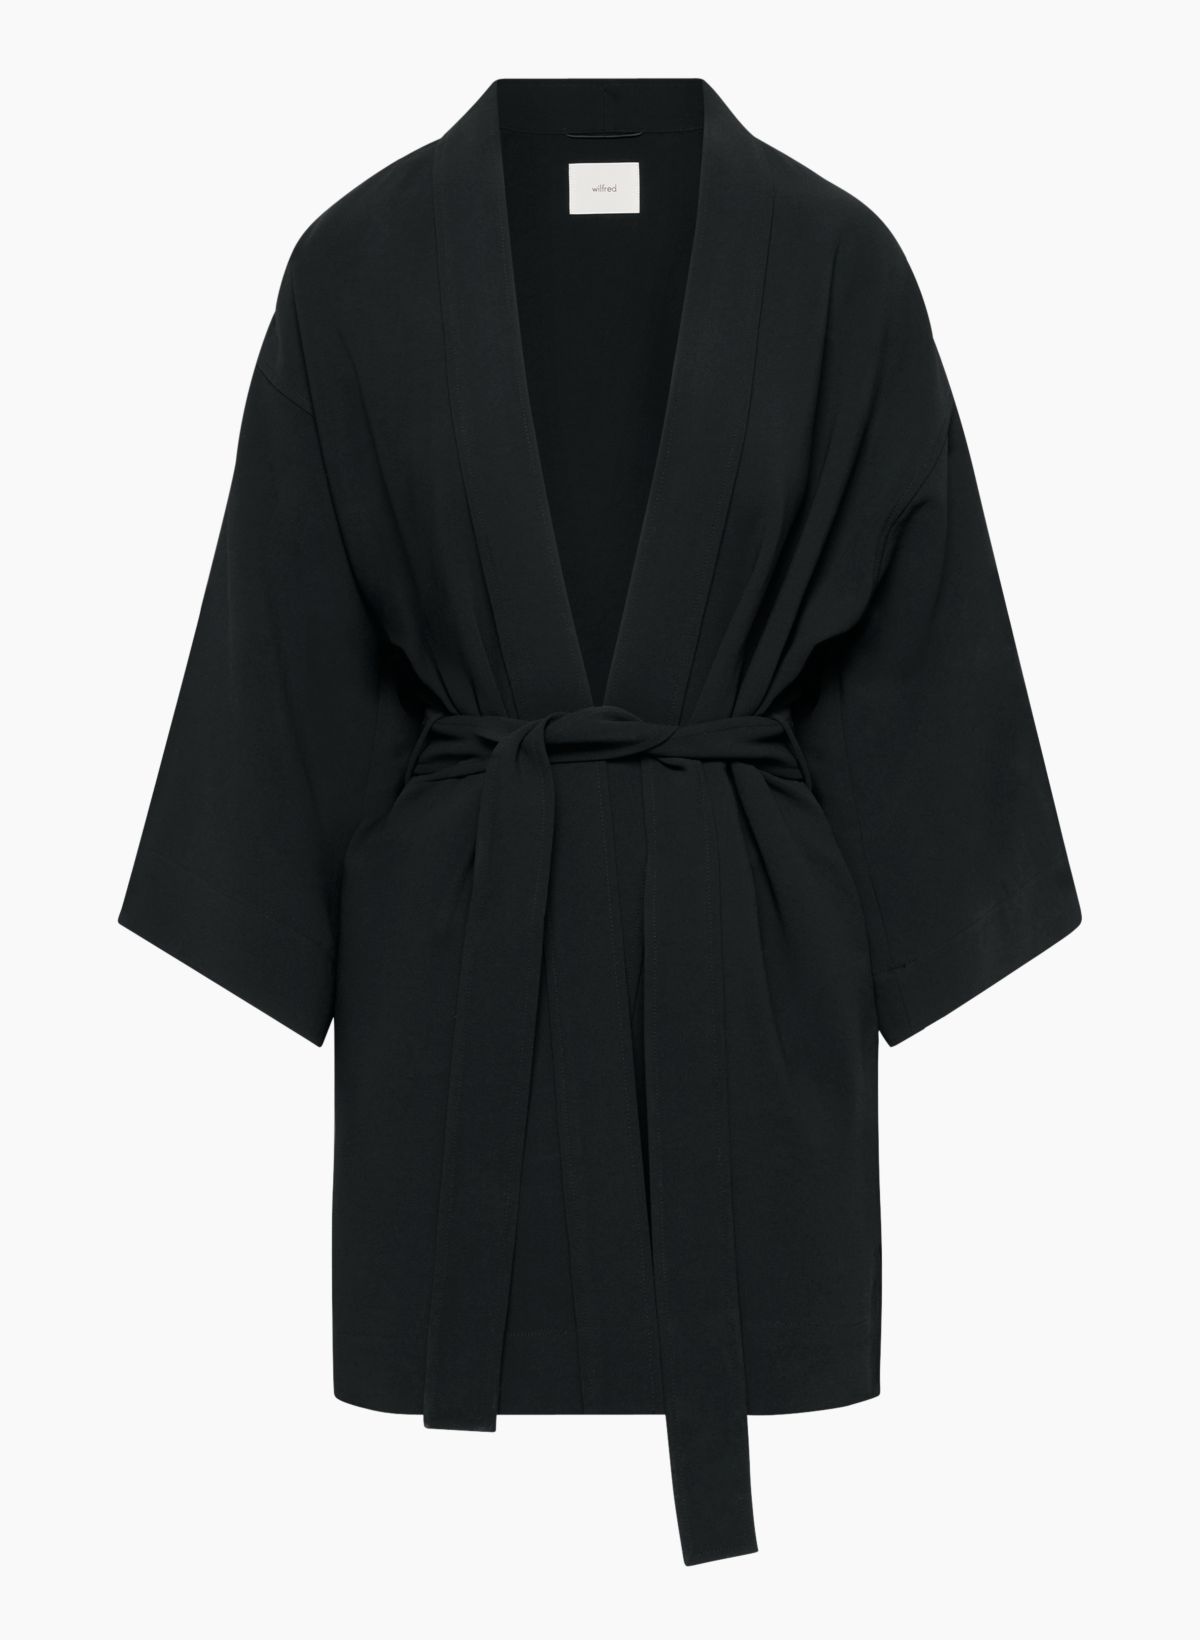 Aritzia Wilfred robe wool coat with belt BLACK size XSMALL